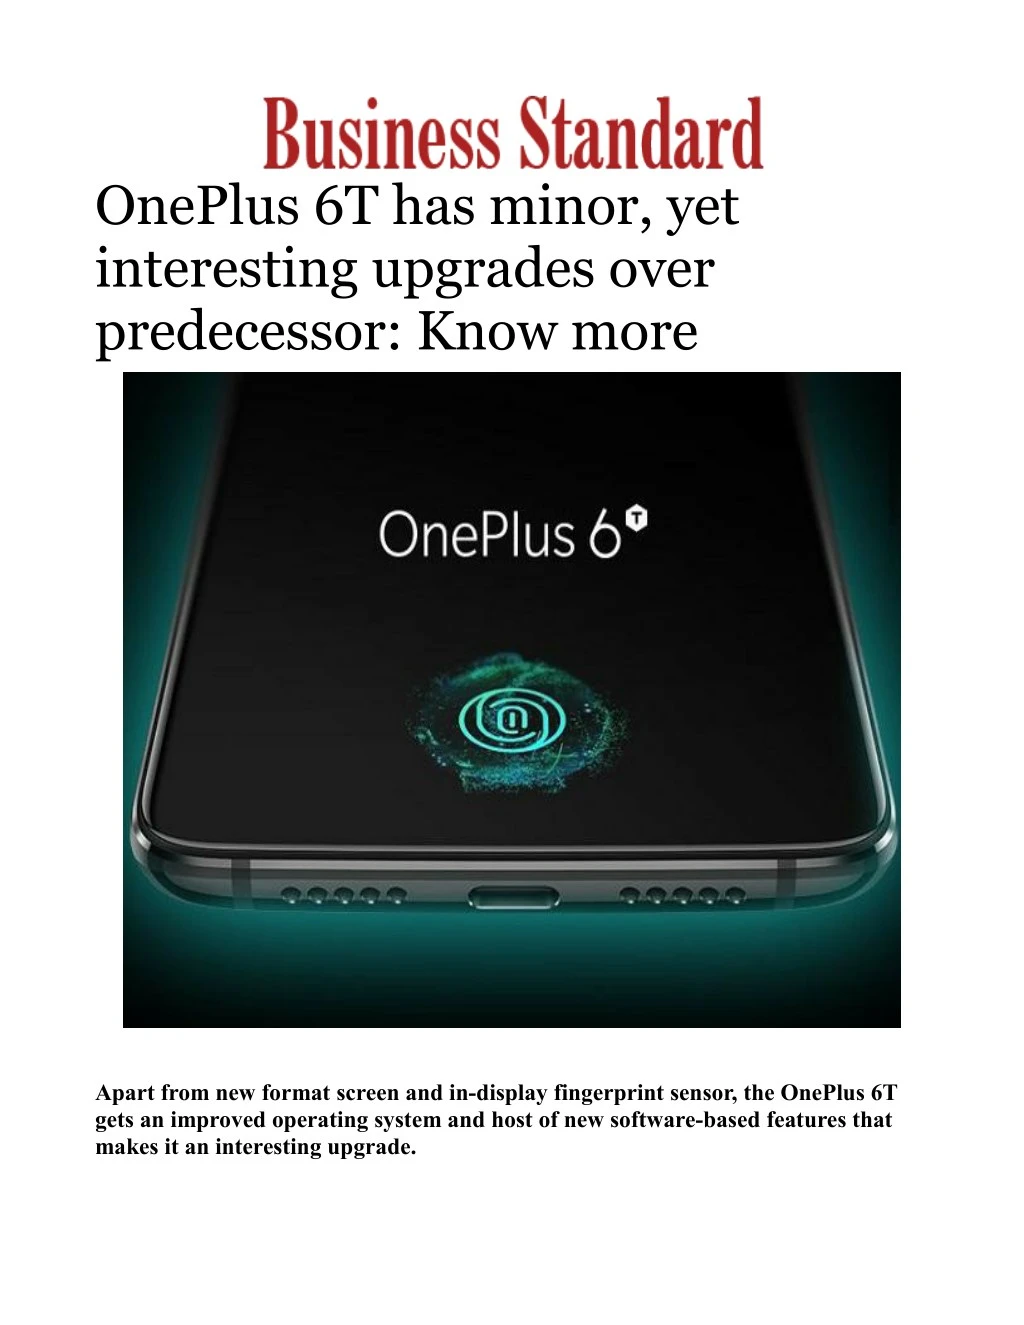 oneplus 6t has minor yet interesting upgrades